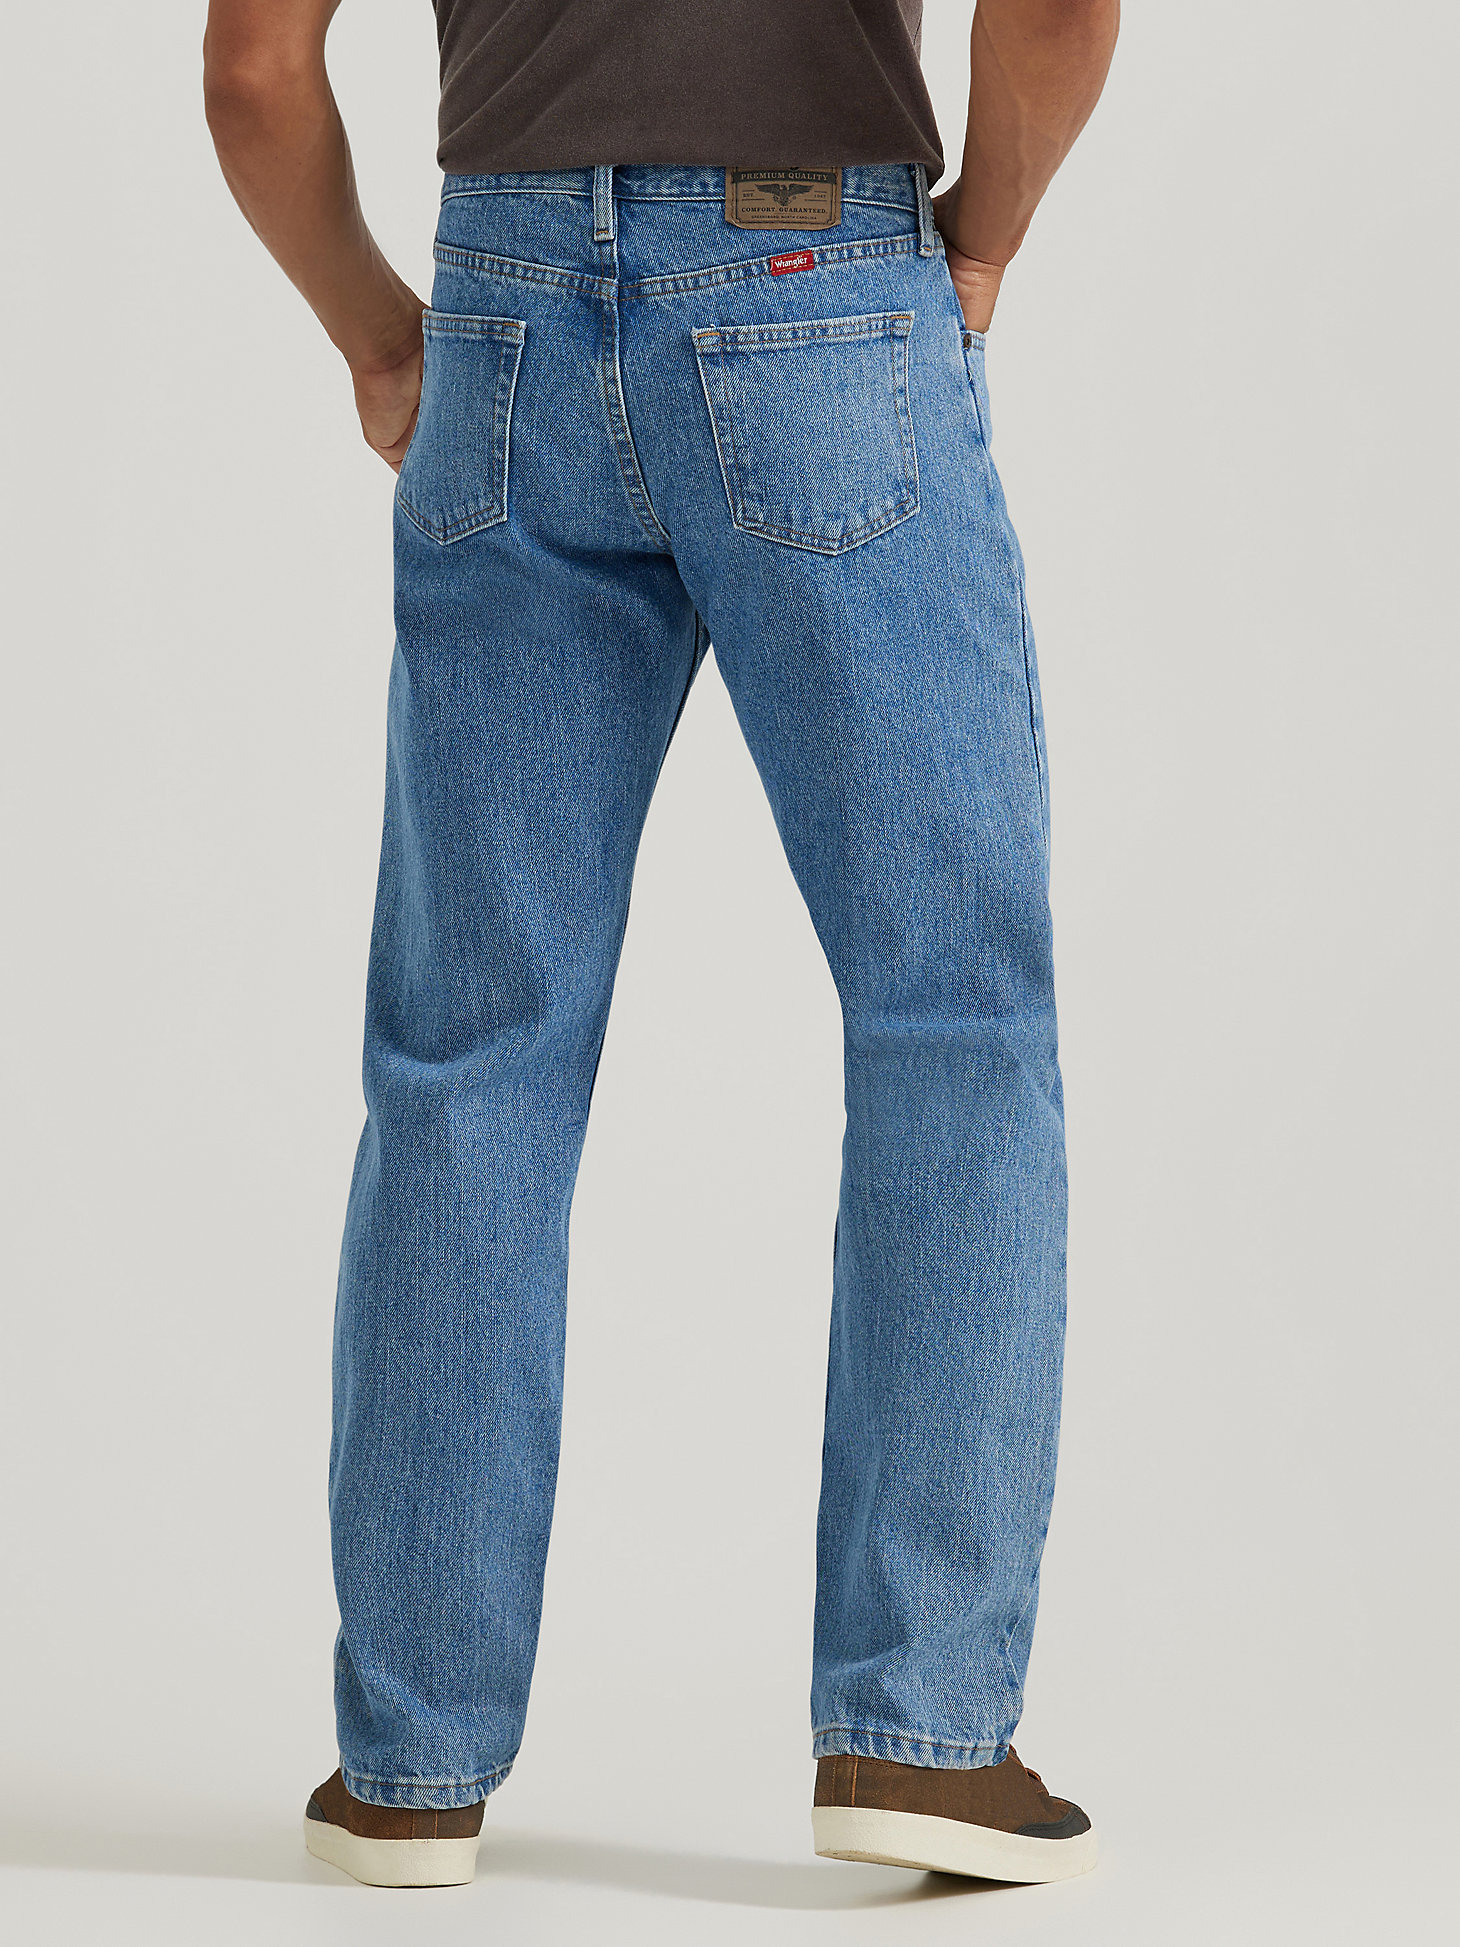 Wrangler® Five Star Premium Denim Relaxed Fit Jean in Stone Bleach alternative view 1